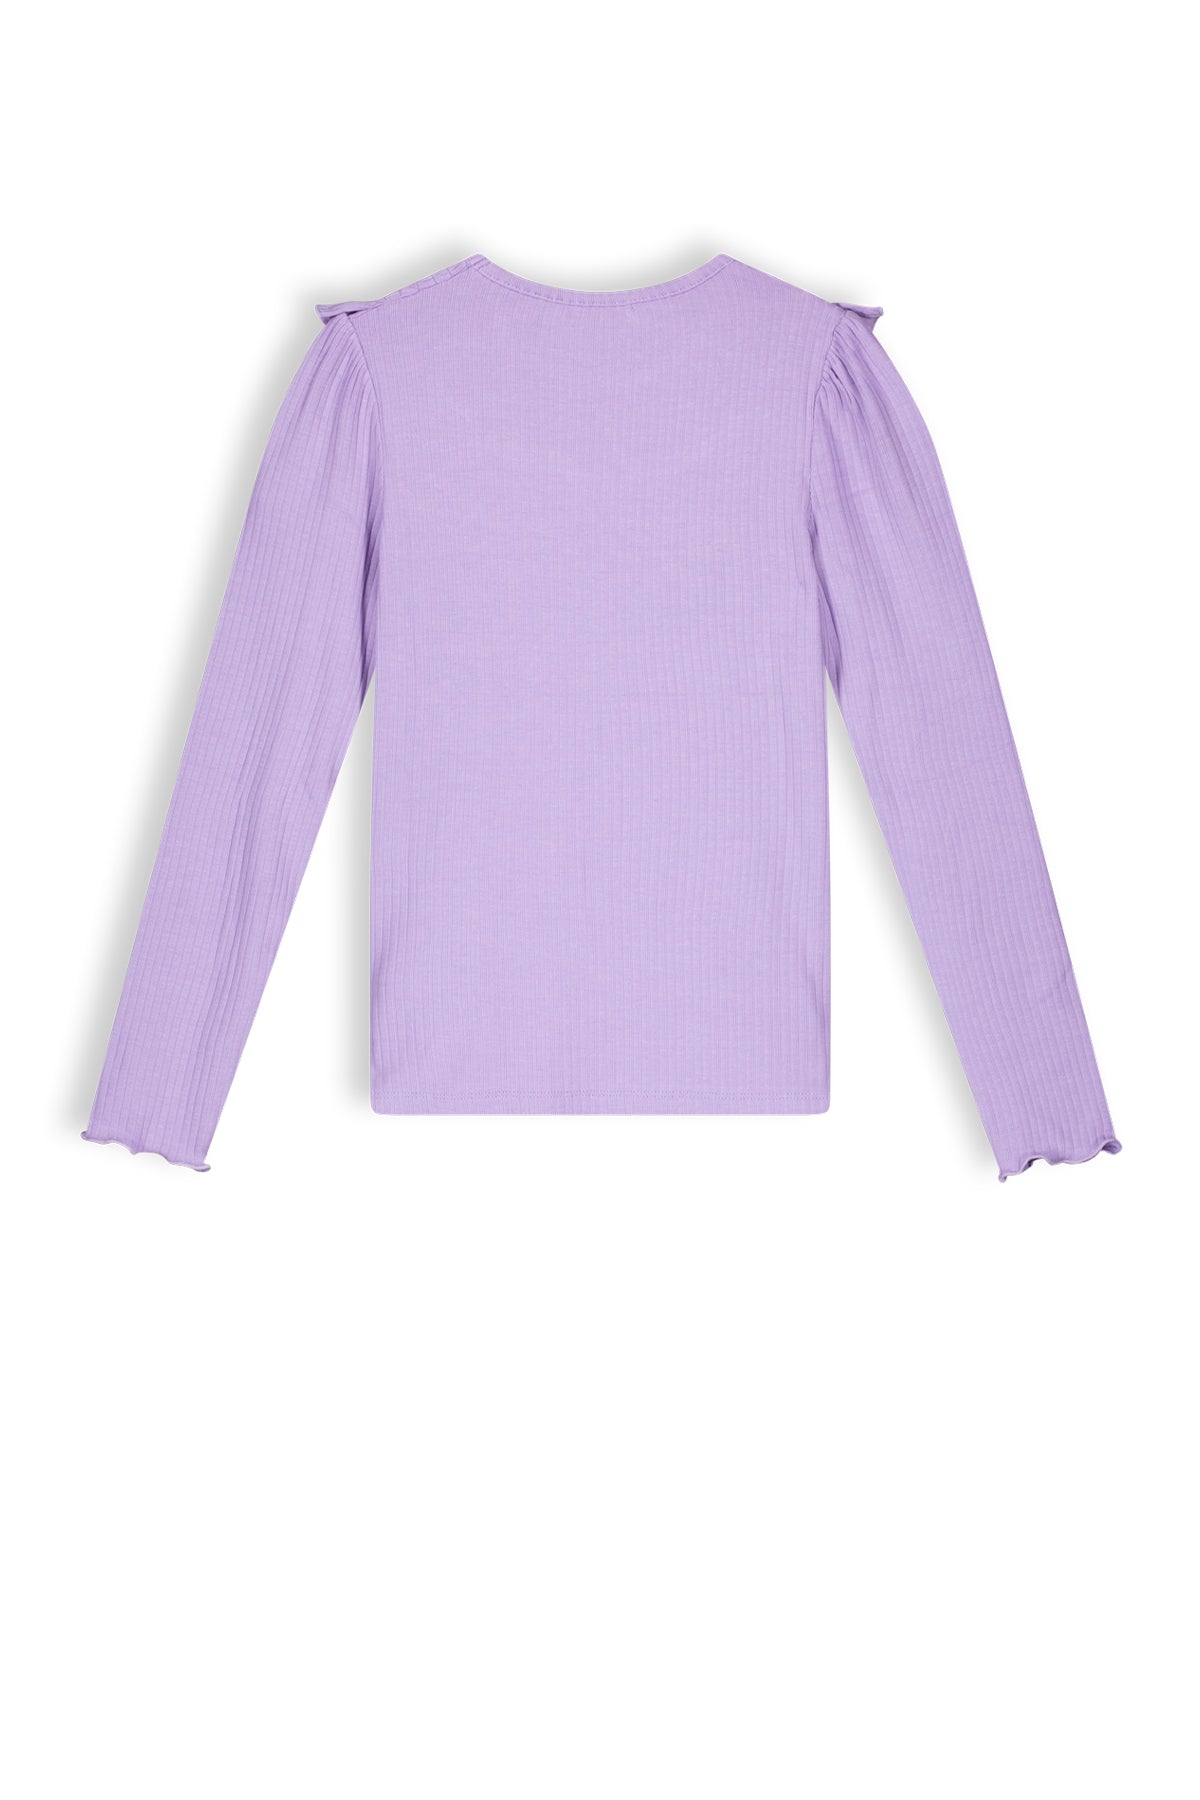 Meisjes Kris girls rib jersey tshirt l/sl van NoNo in de kleur Galaxy Lilac in maat 134-140.